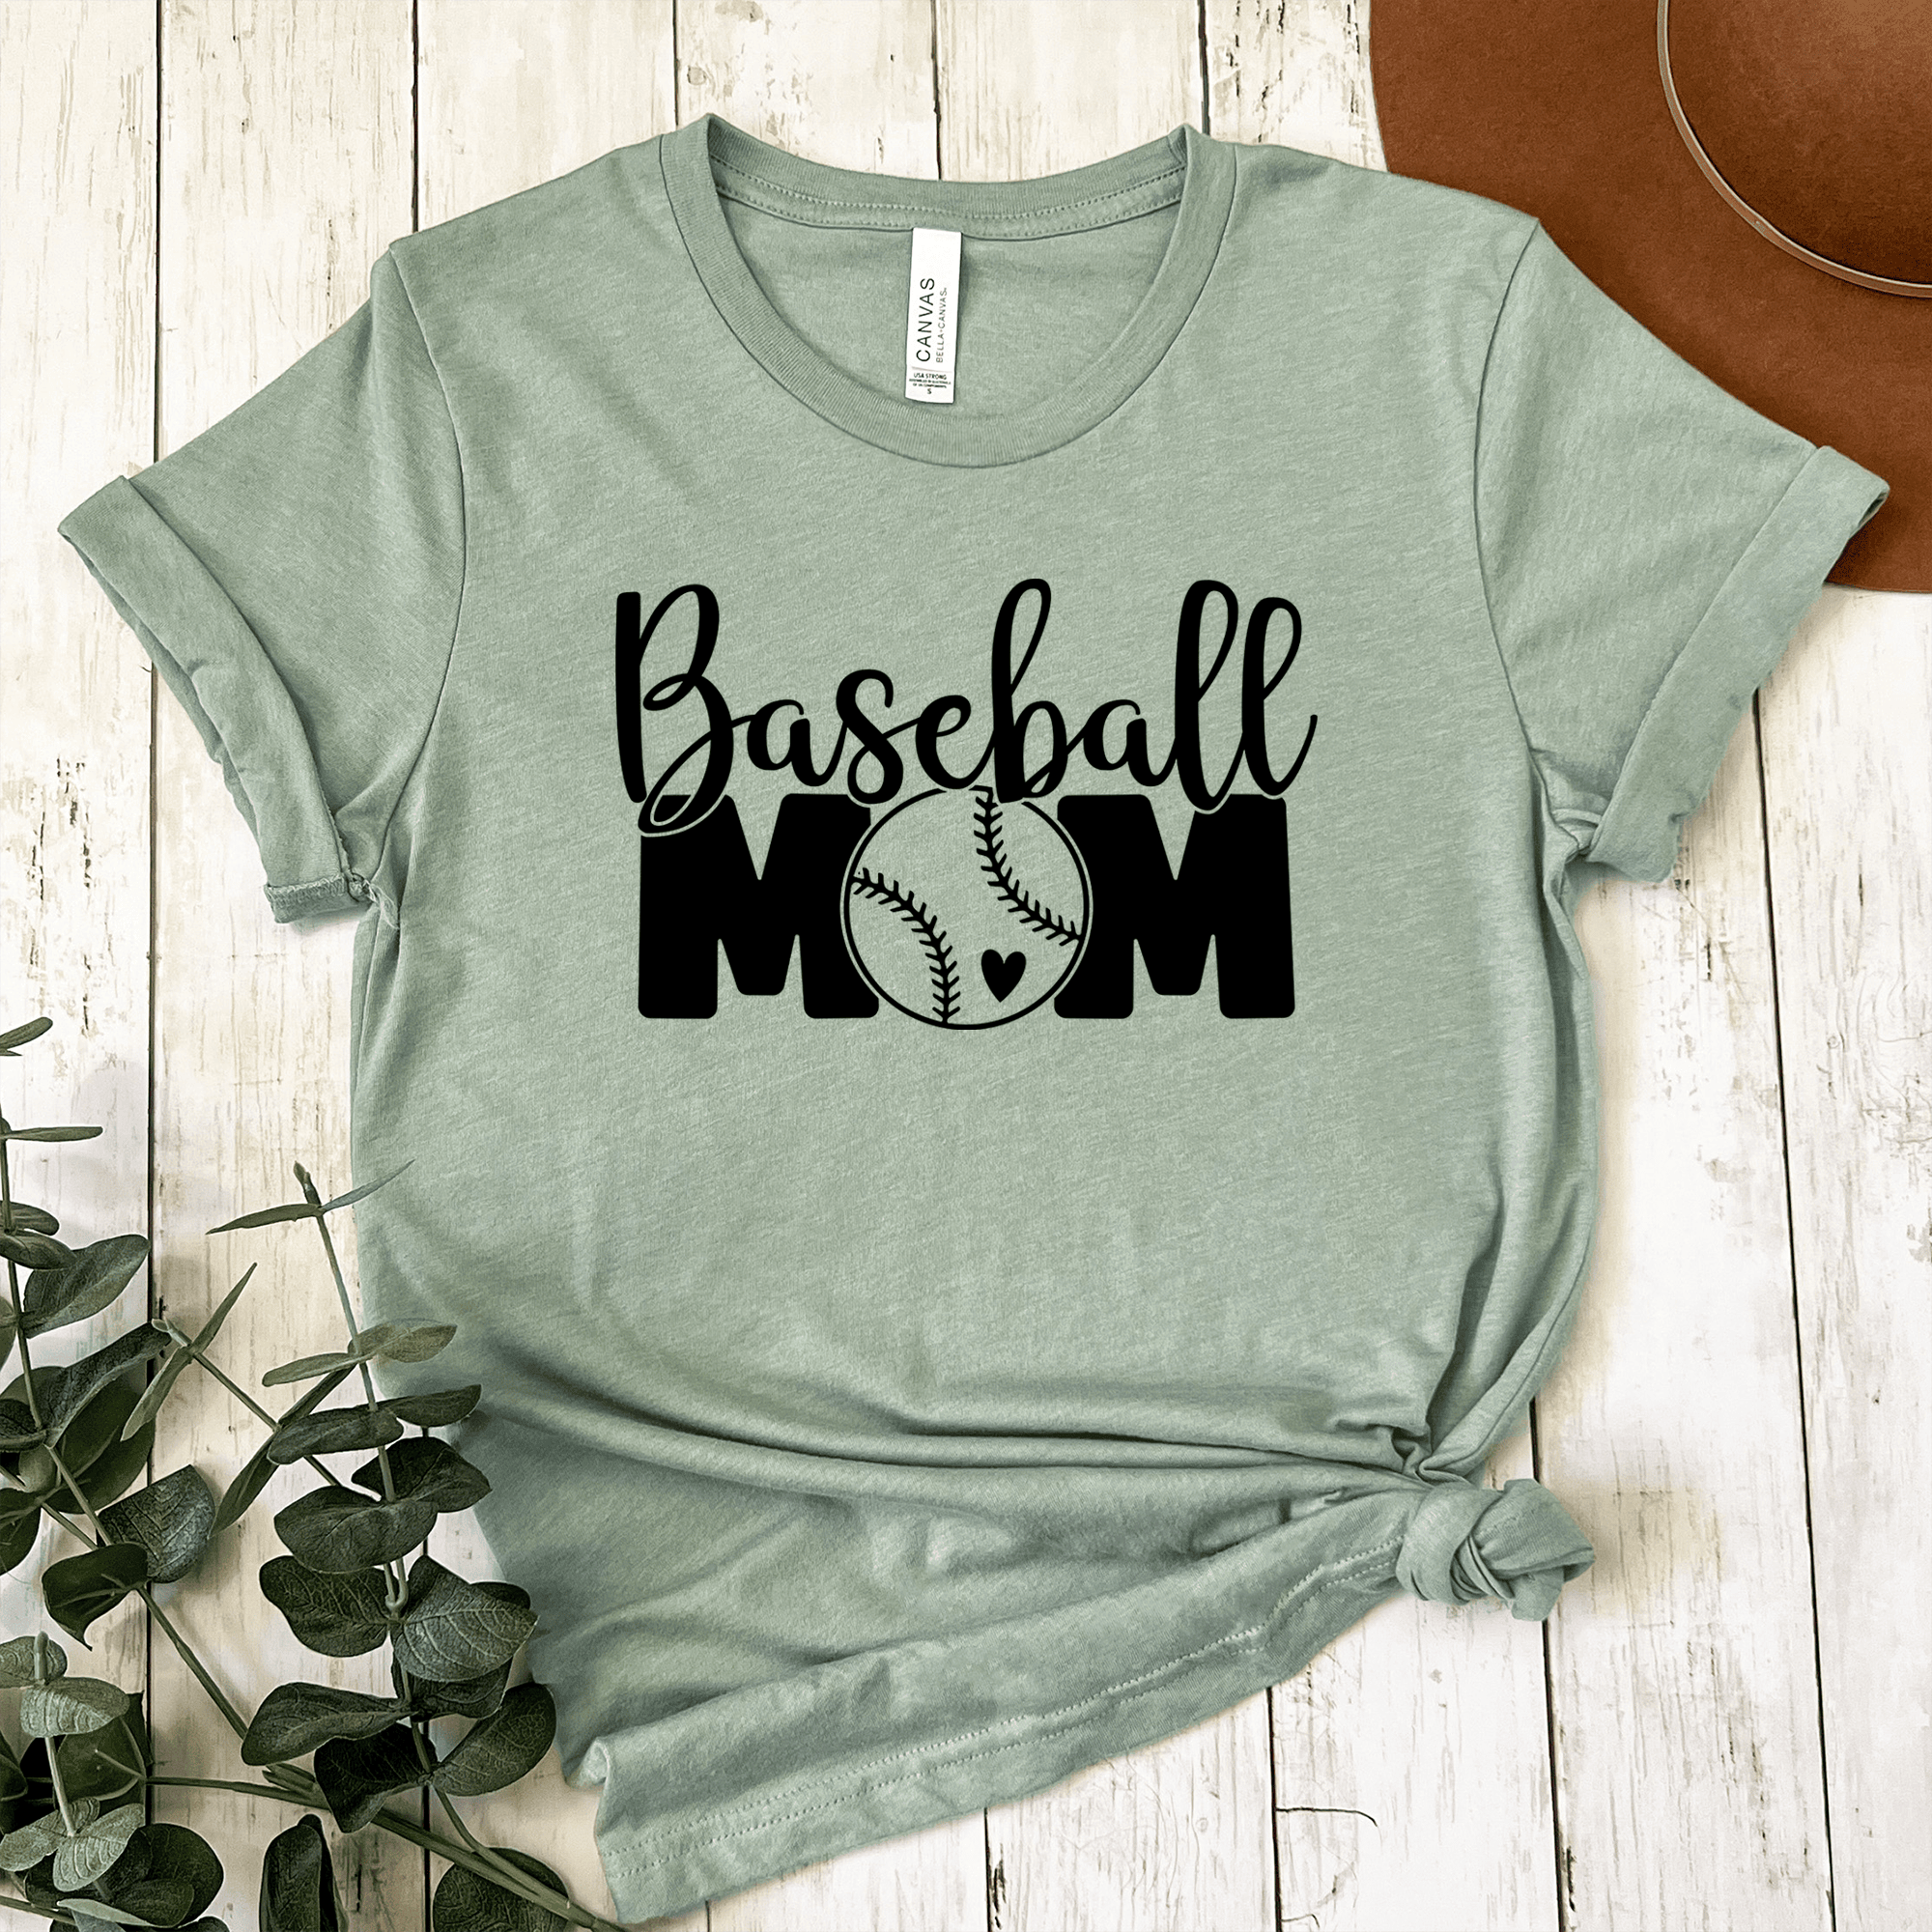 Womens Light Green T Shirt with Proud-Baseball-Mom design